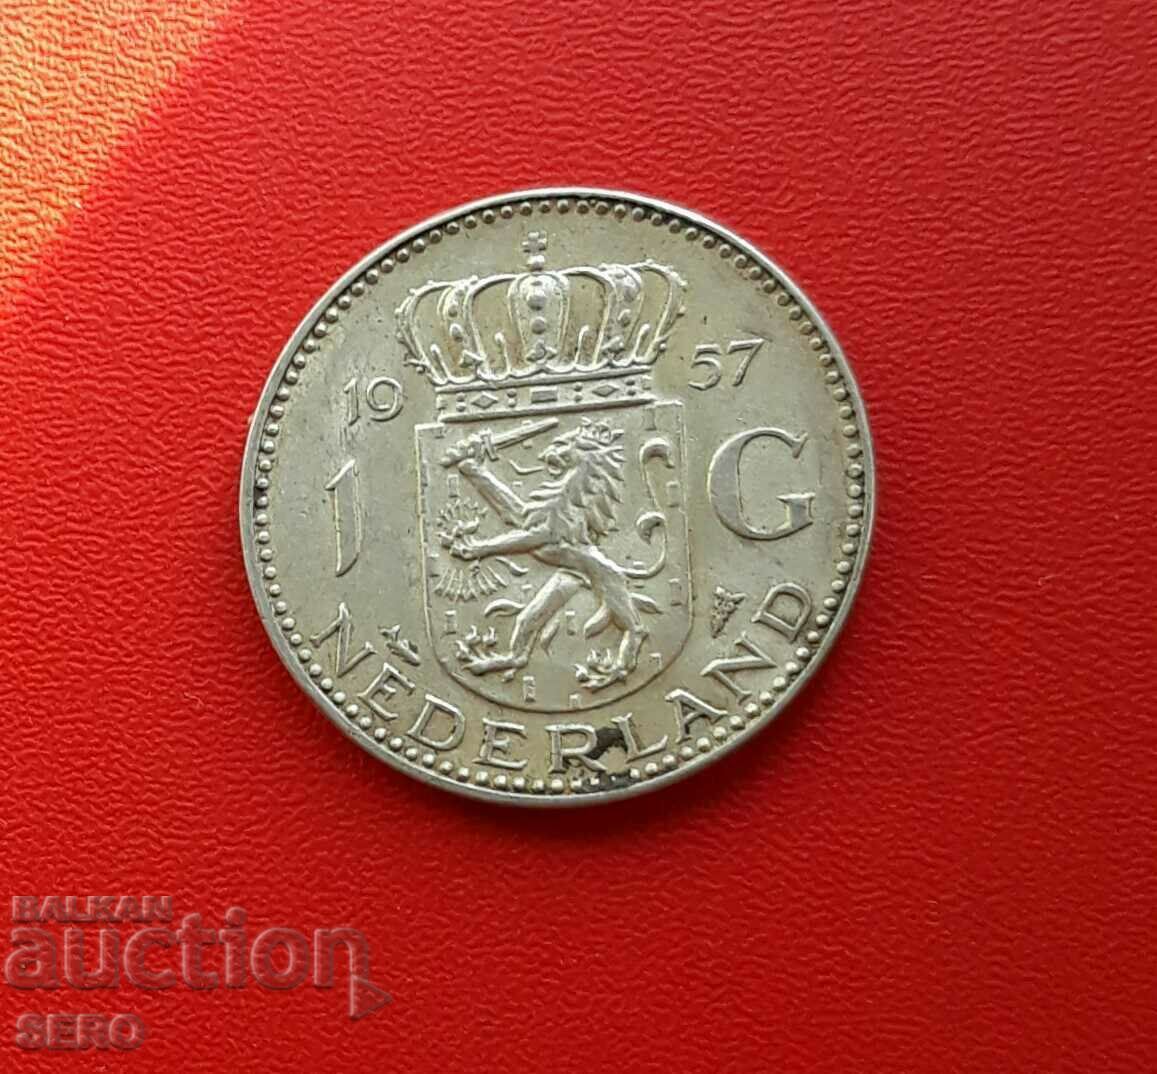 Olanda-1 gulden 1957